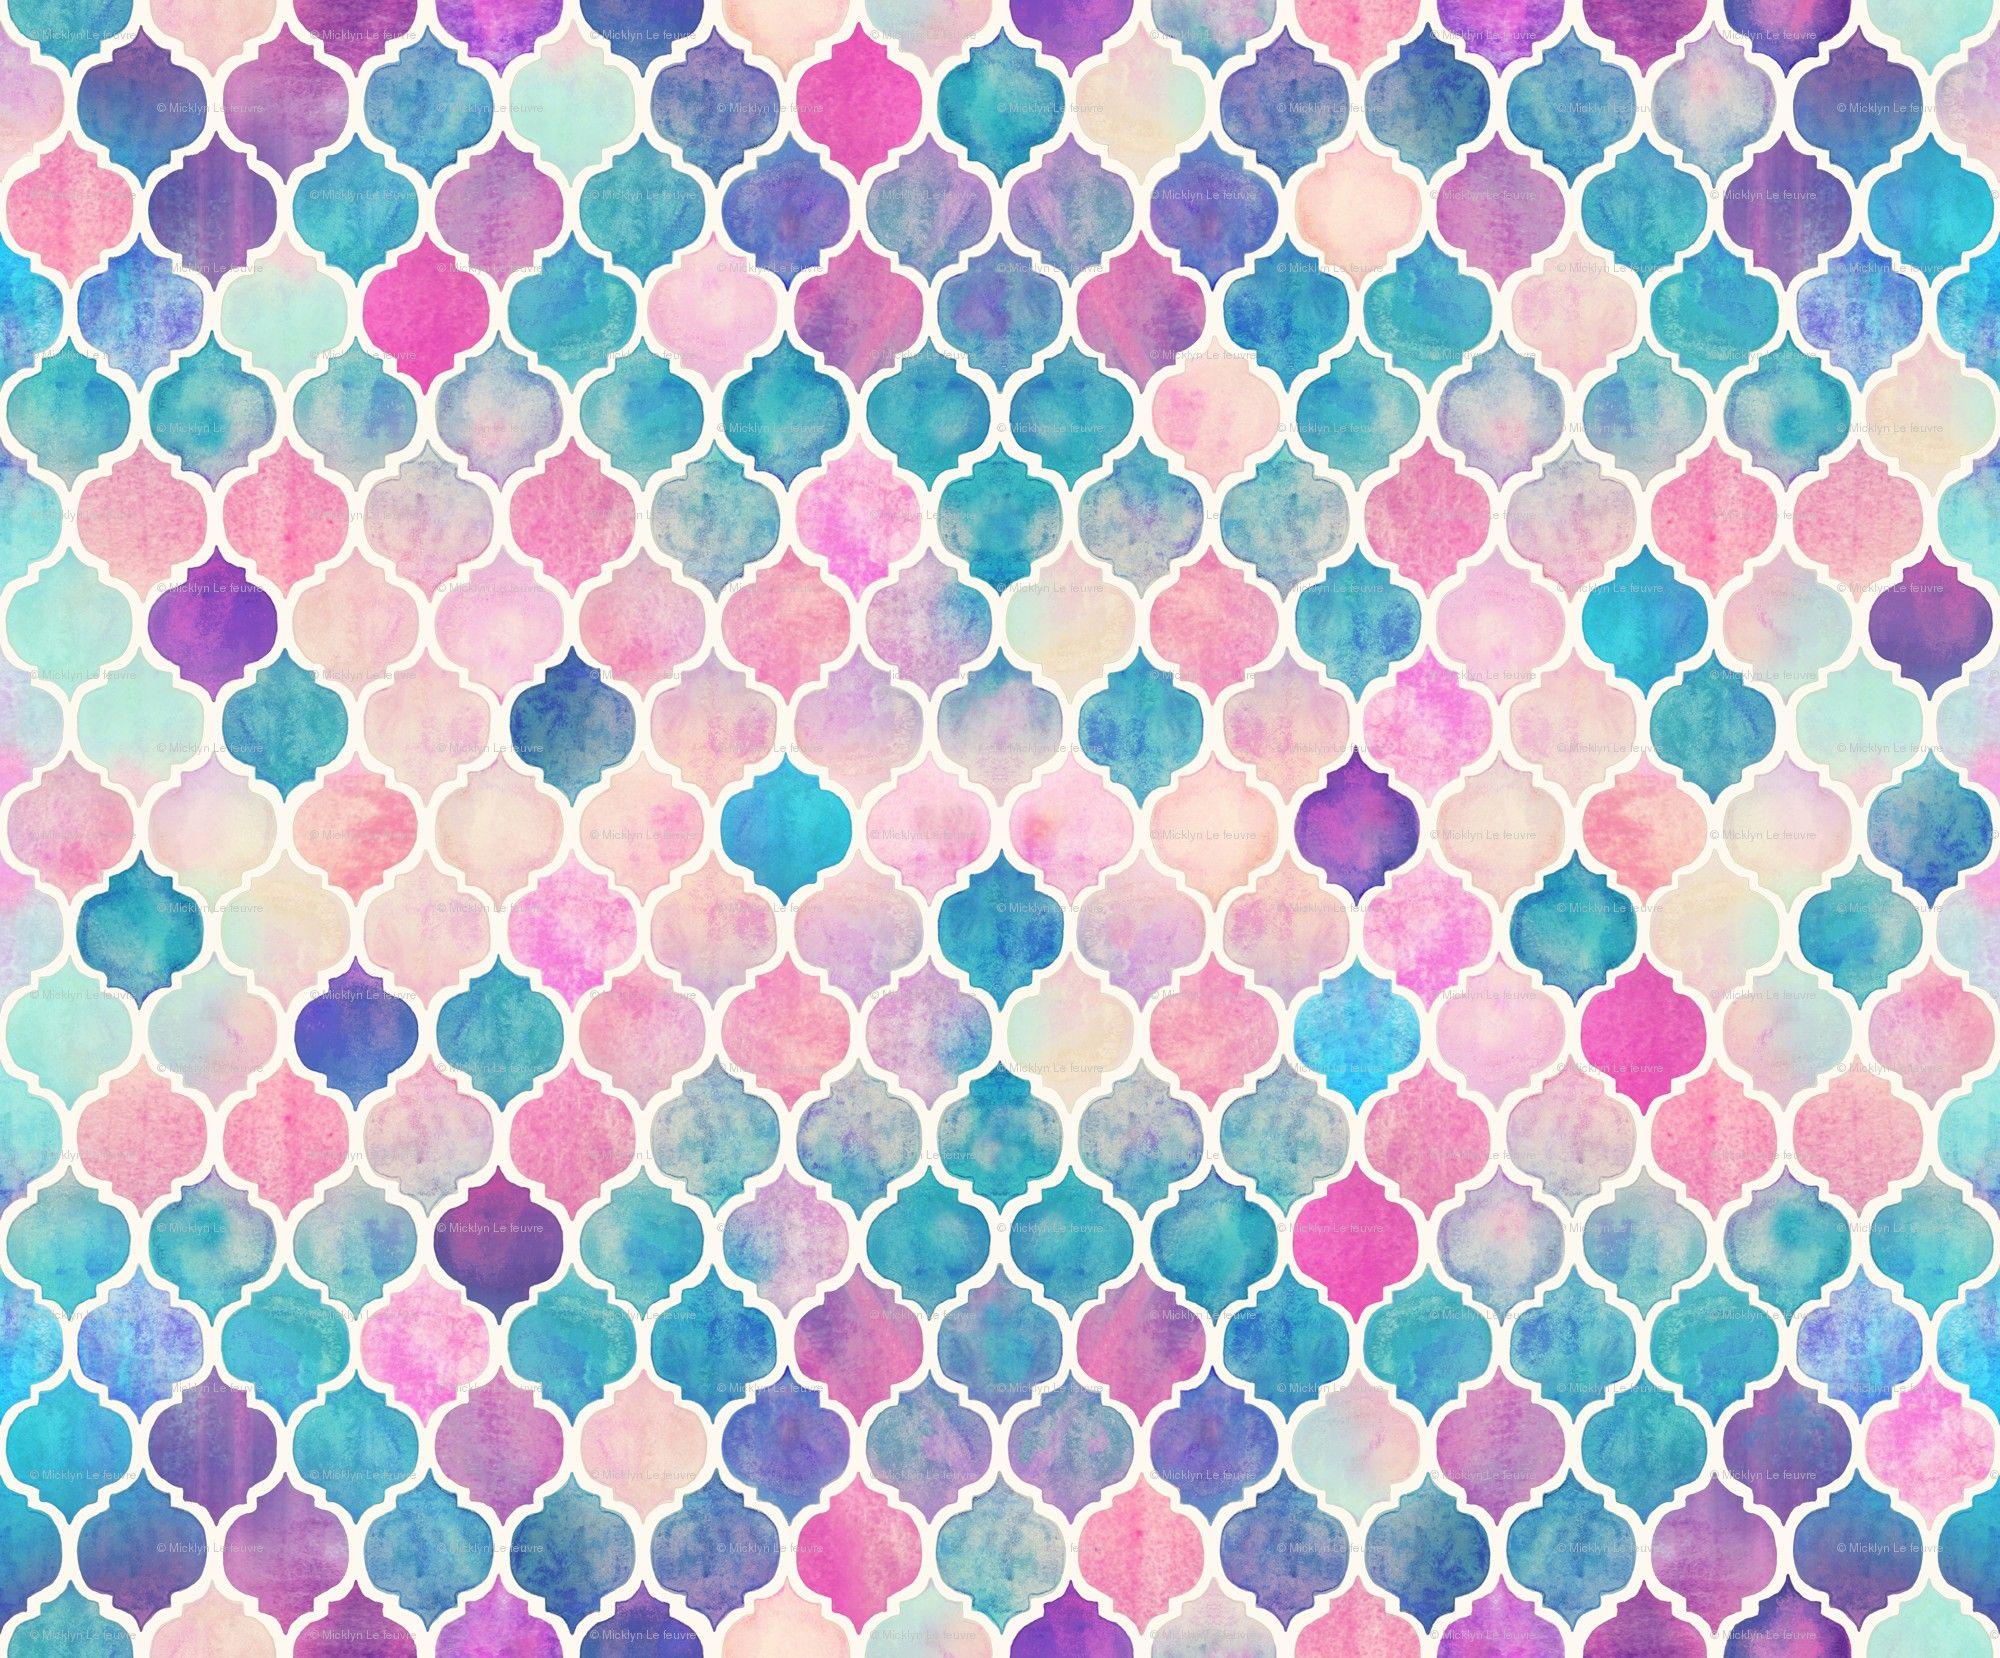 Rainbow background TumblrDownload free stunning full HD